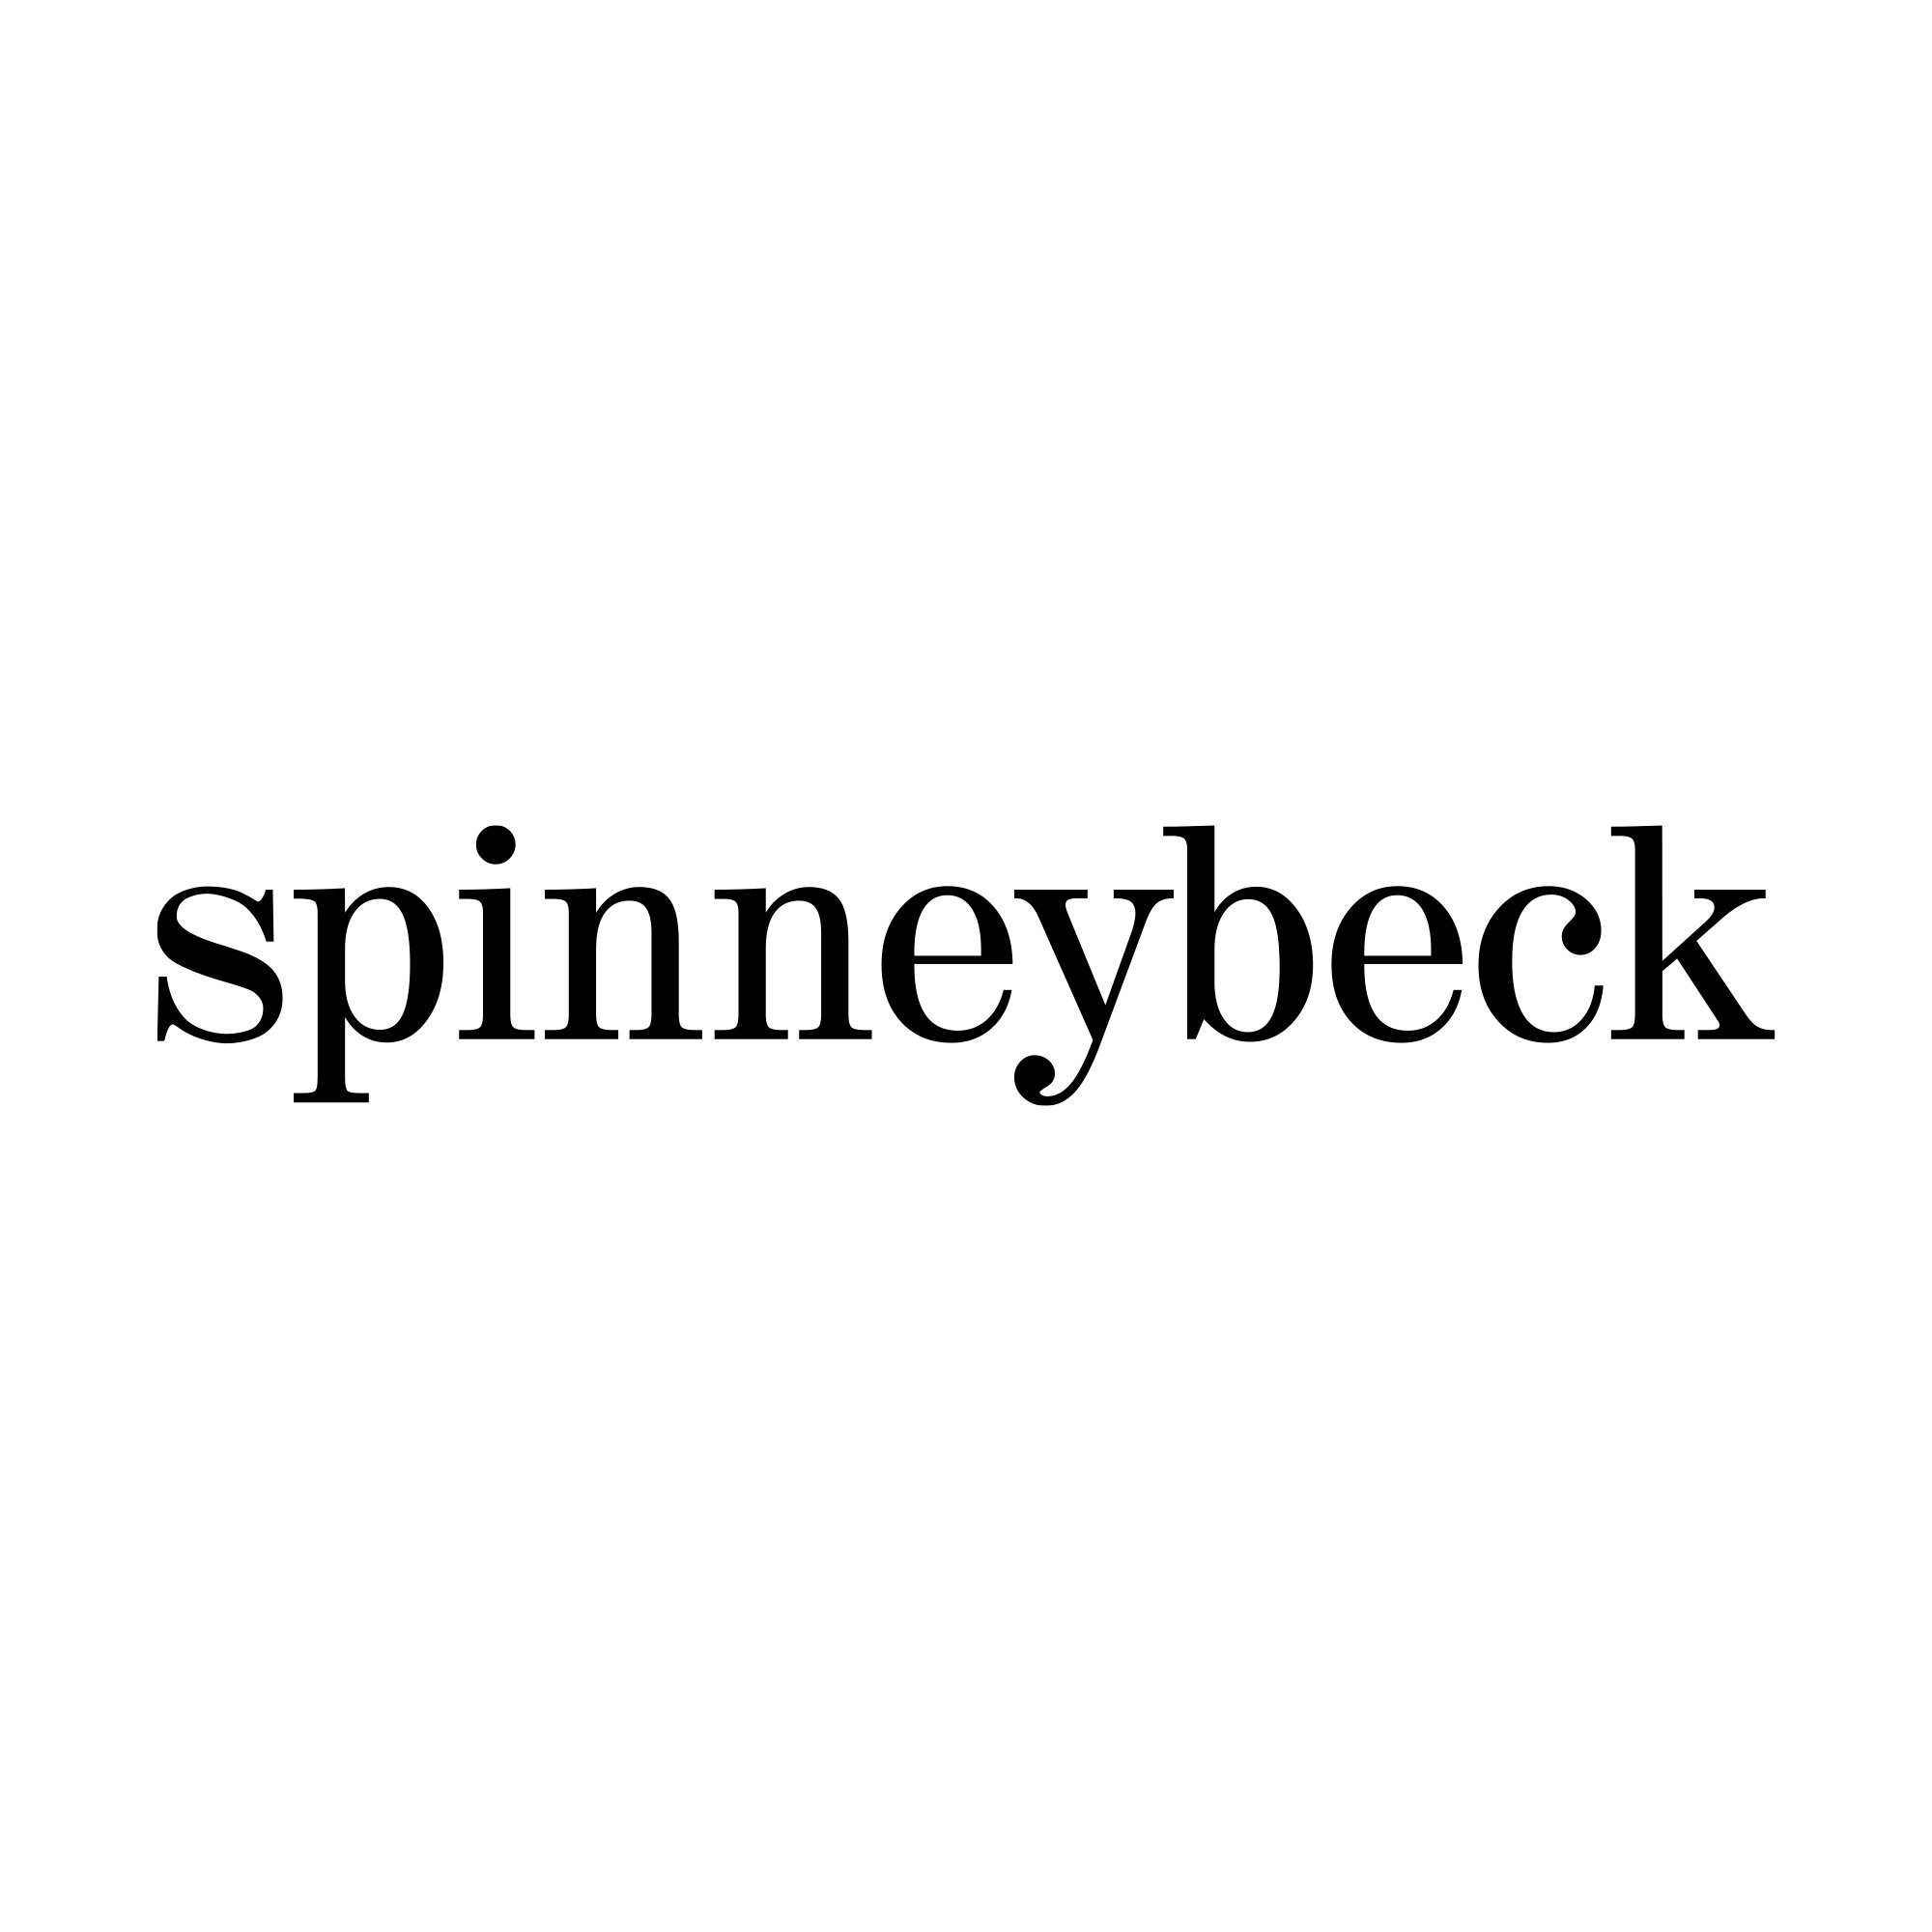 Spinneybeck Logo.jpg